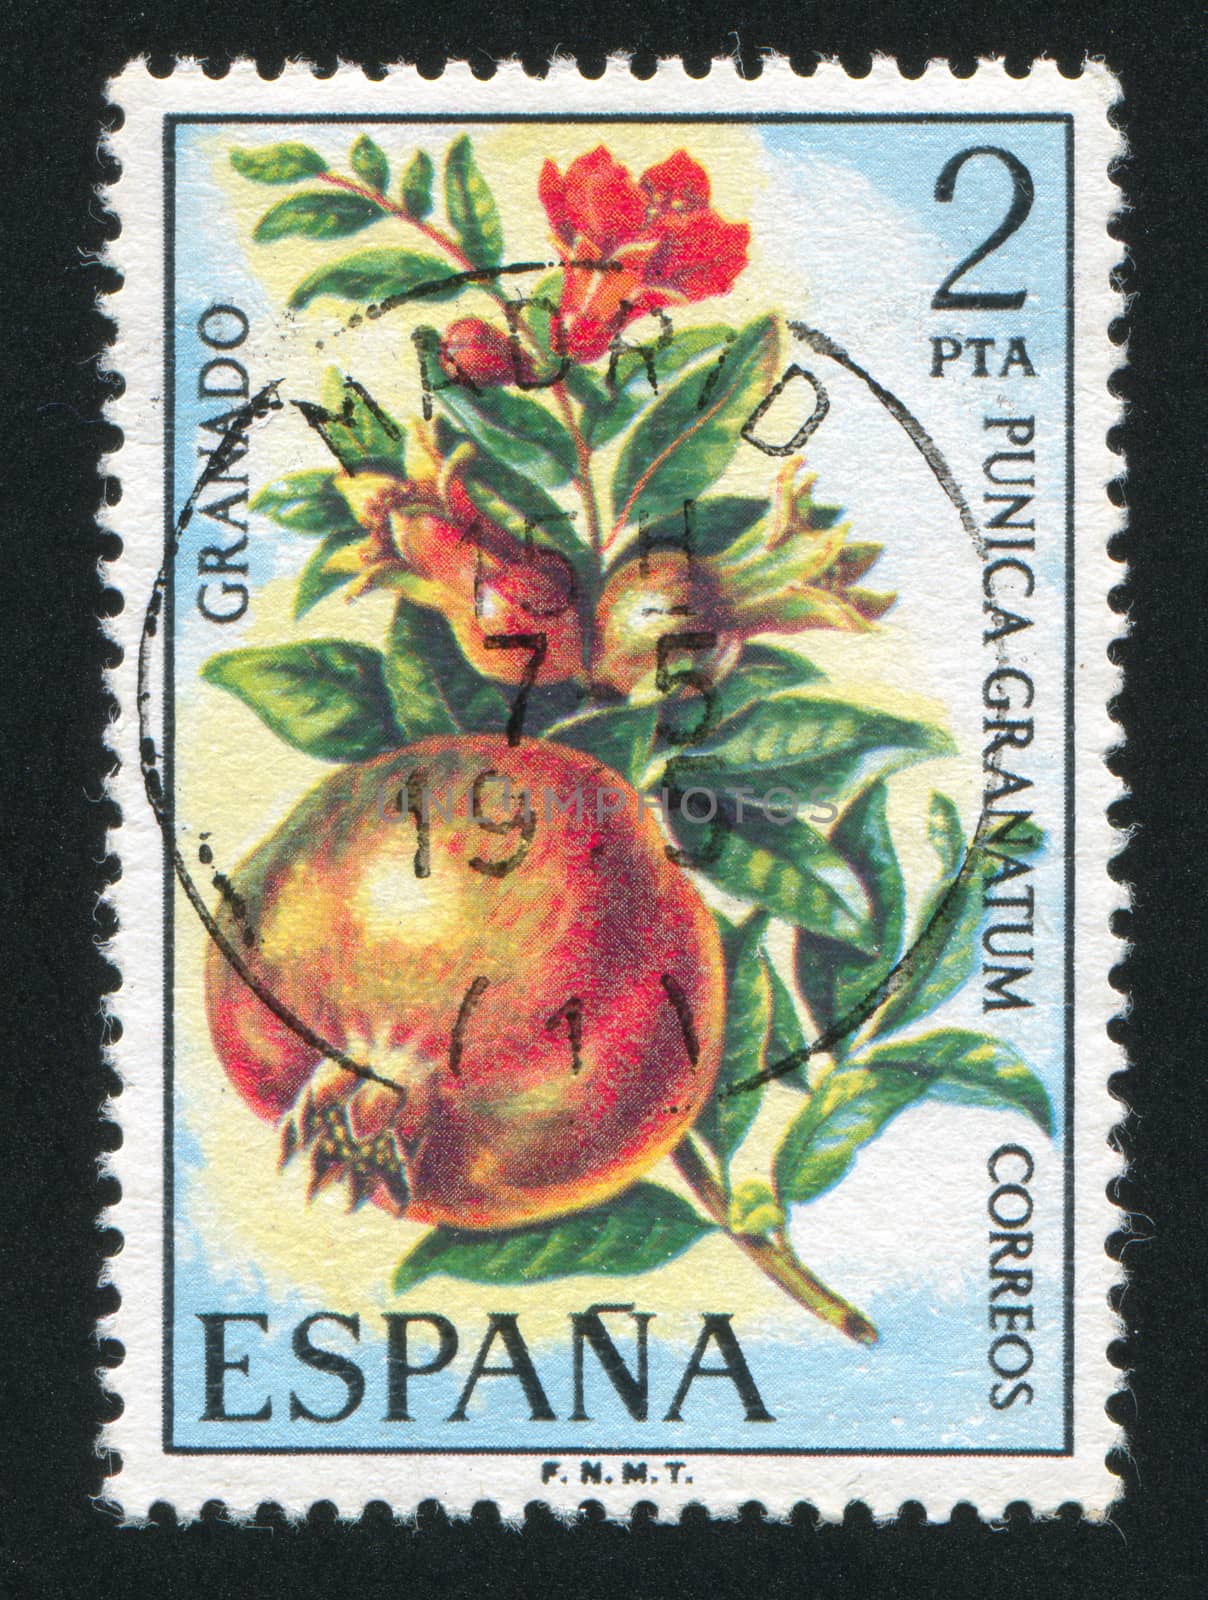 SPAIN - CIRCA 1975: stamp printed by Spain, shows Pomegranates, circa 1975